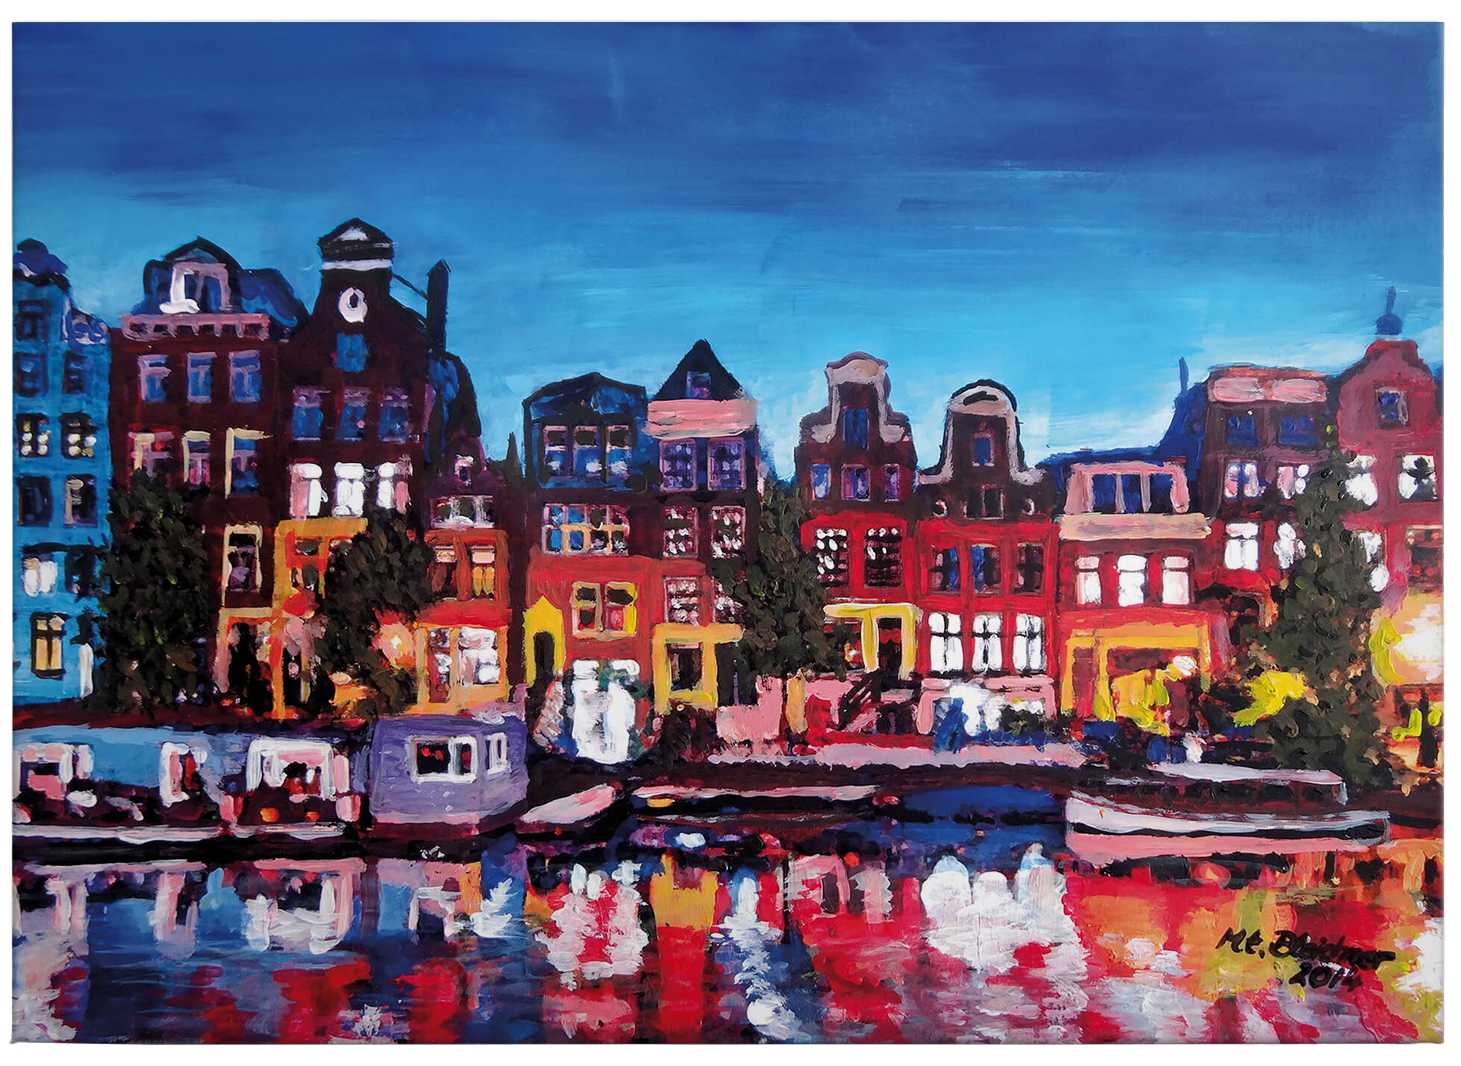             Peinture sur toile "Amsterdam" de Bleichner - 0,70 m x 0,50 m
        